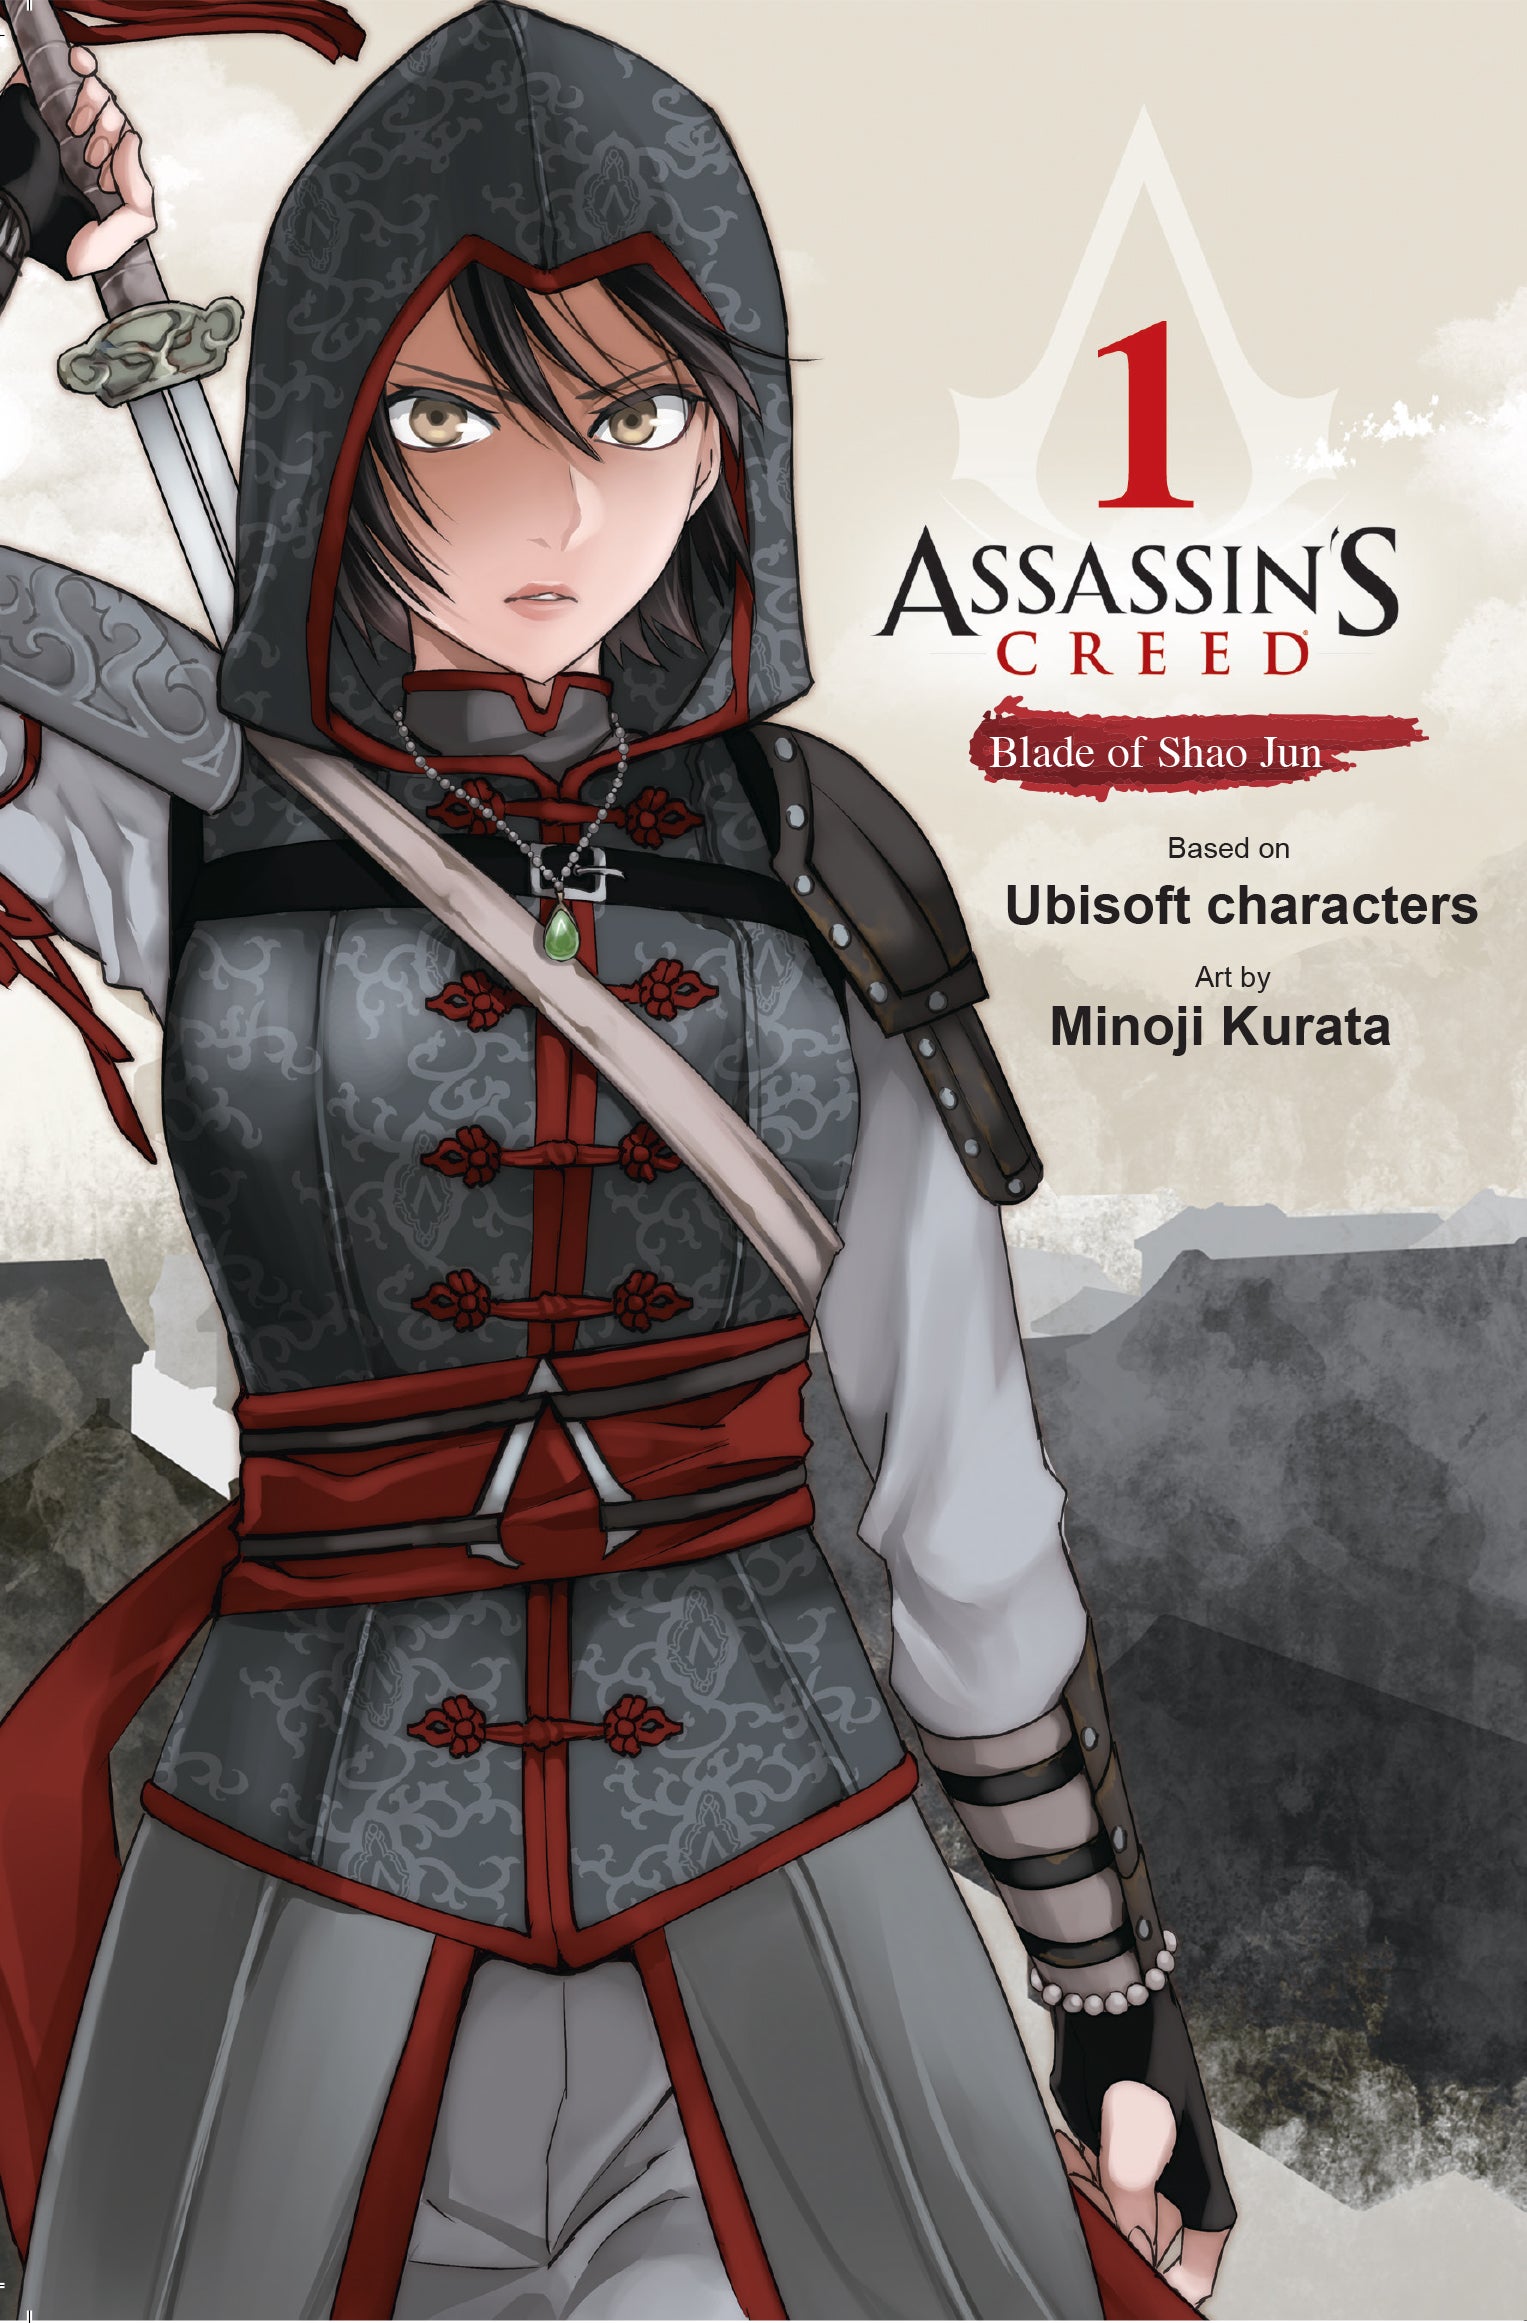 Assassin's Creed manga features fan-favourite Shao Jun 